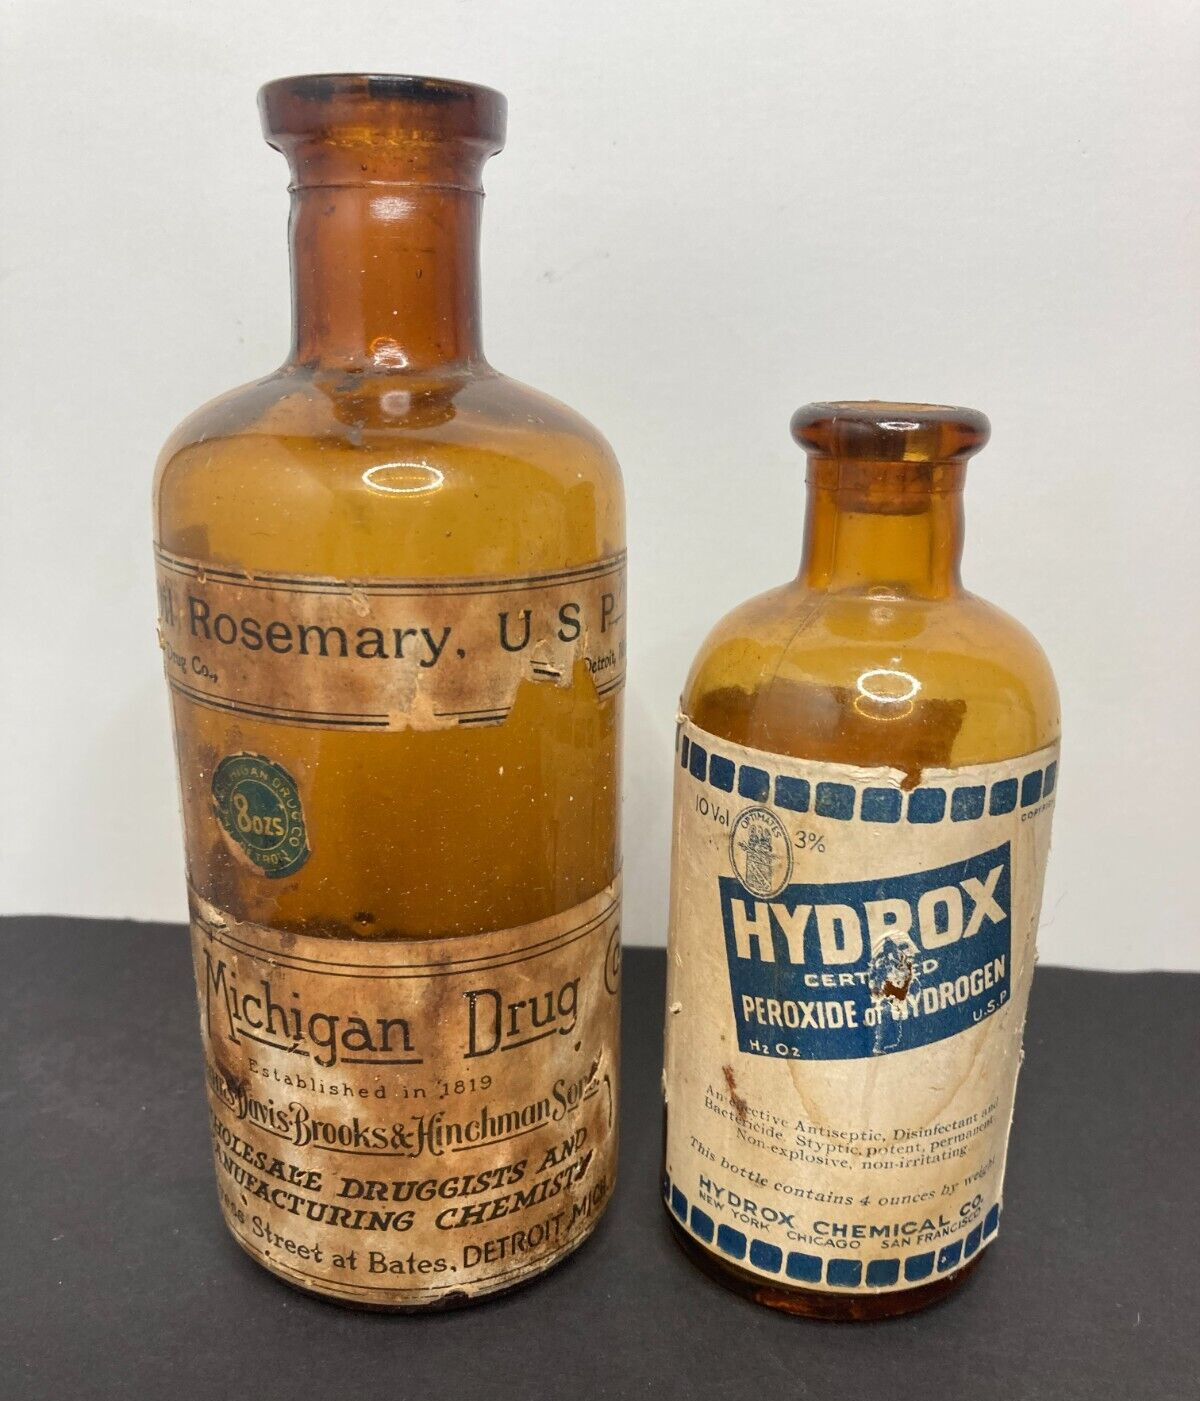 Antique Pharmacy Bottle The Michigan Drug Co. Detroit, Mich & HYDROX bottle